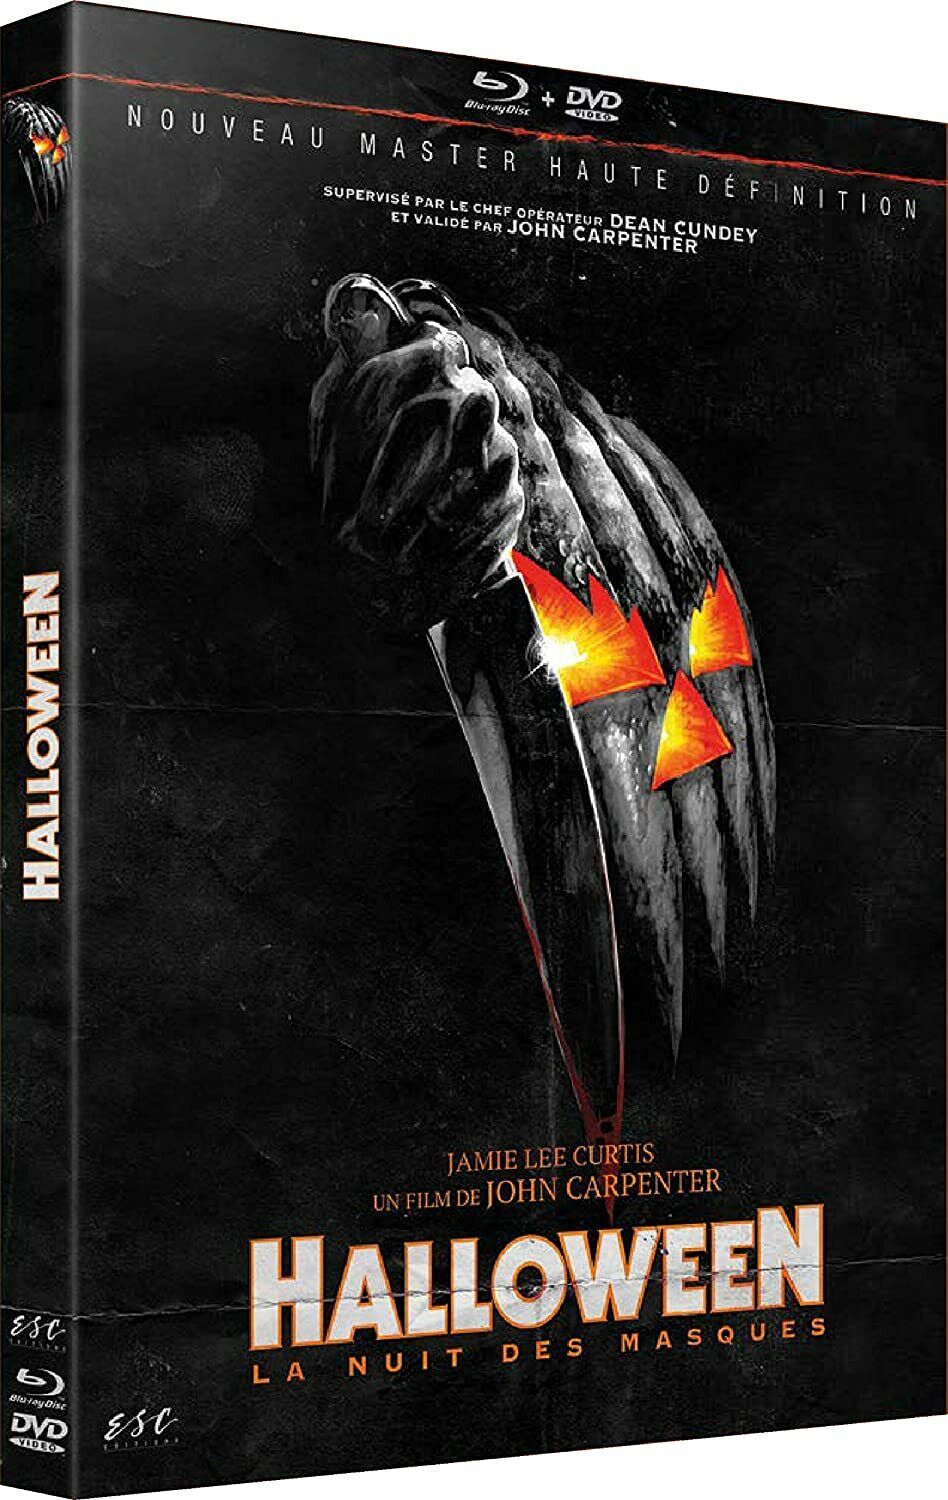 Blu Ray + DVD : Halloween La nuit des masques - NEUF